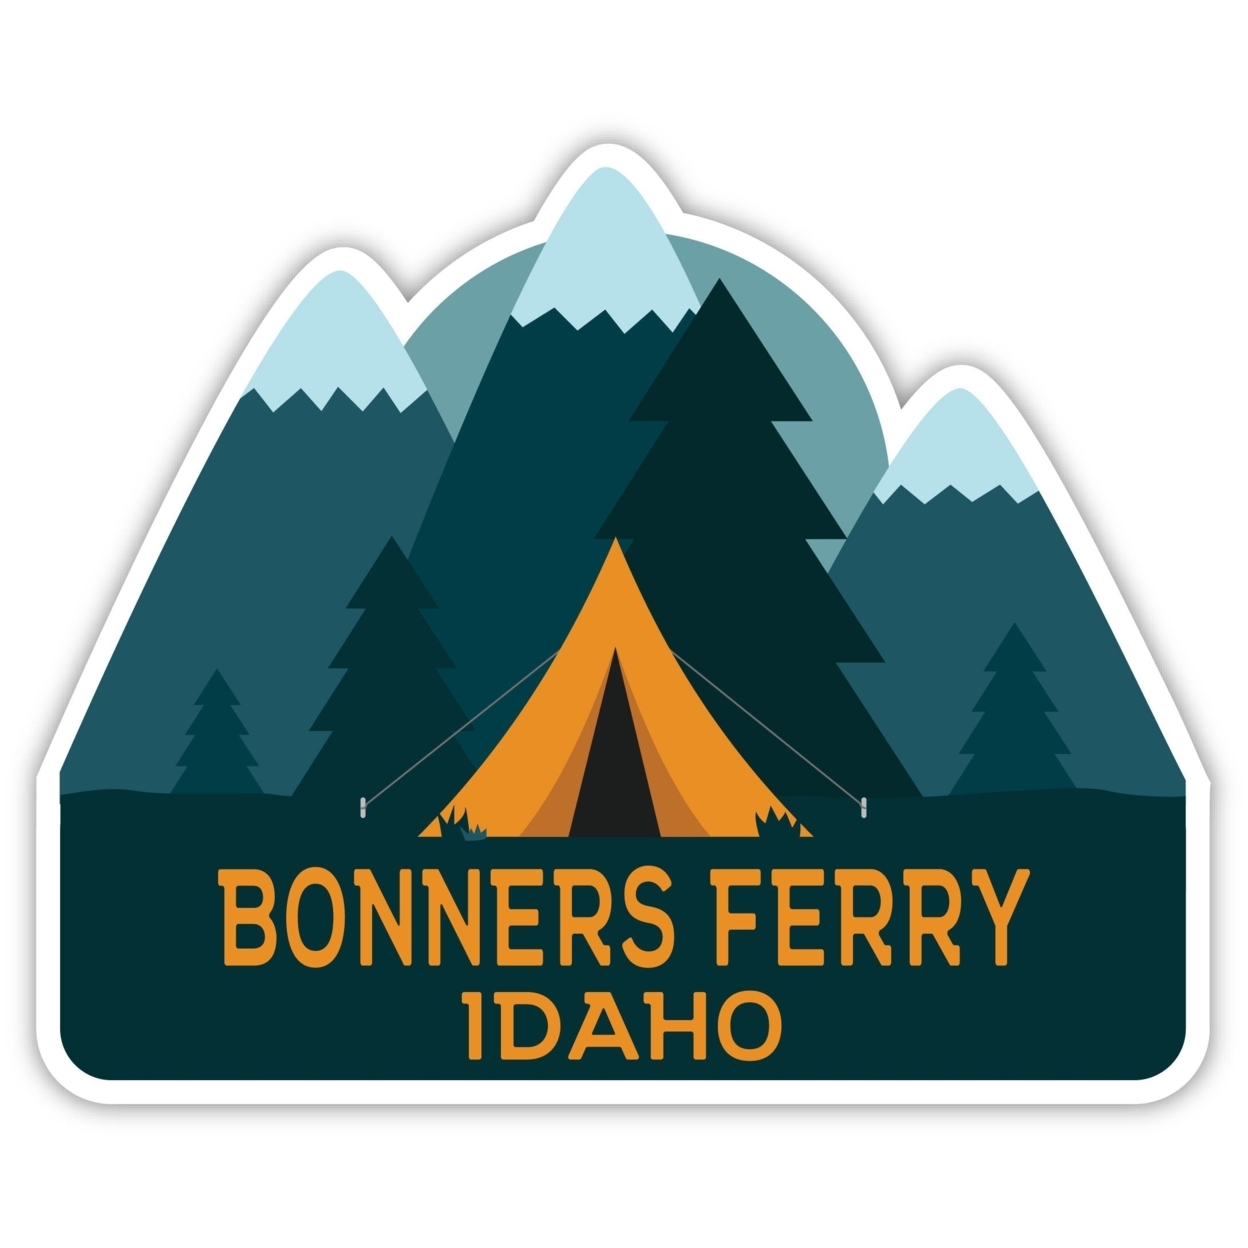 Bonners Ferry Idaho Souvenir Decorative Stickers (Choose Theme And Size) - Single Unit, 8-Inch, Adventures Awaits